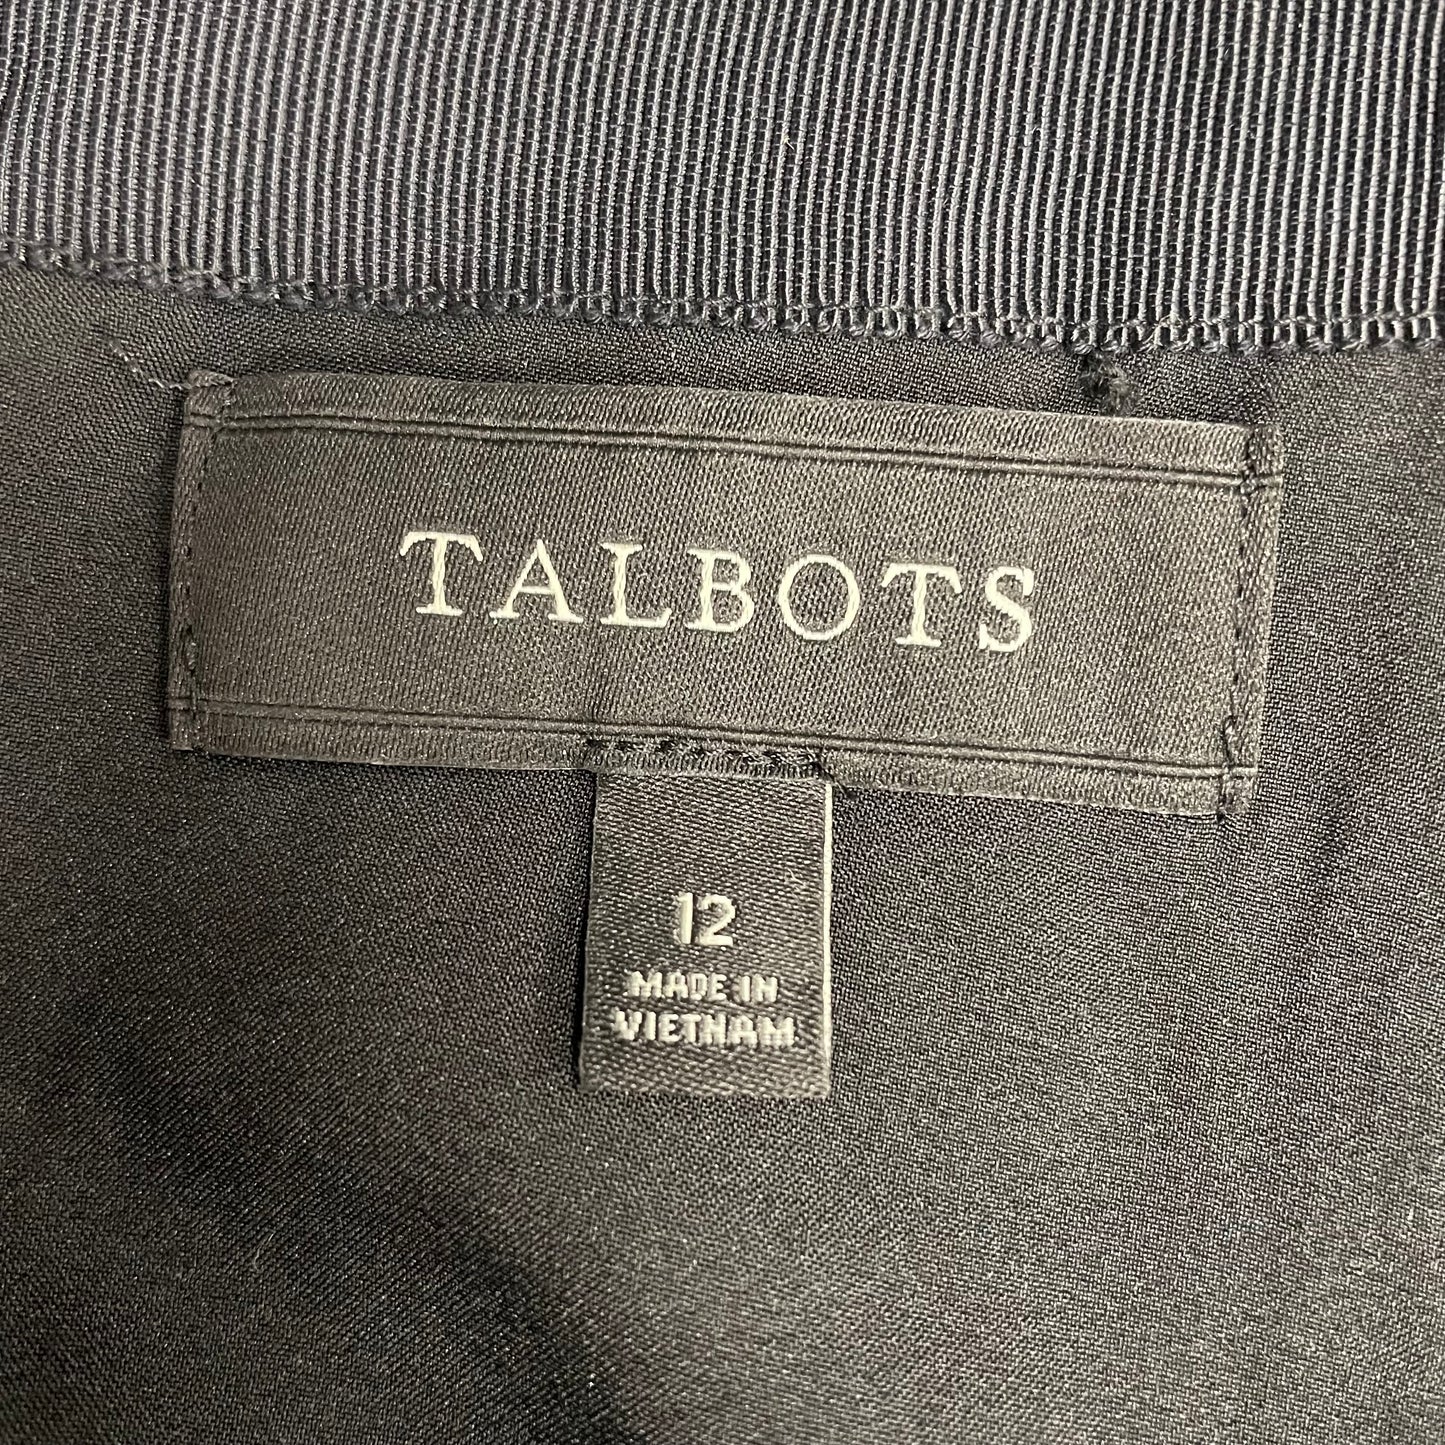 Skirt Mini & Short By Talbots  Size: 12